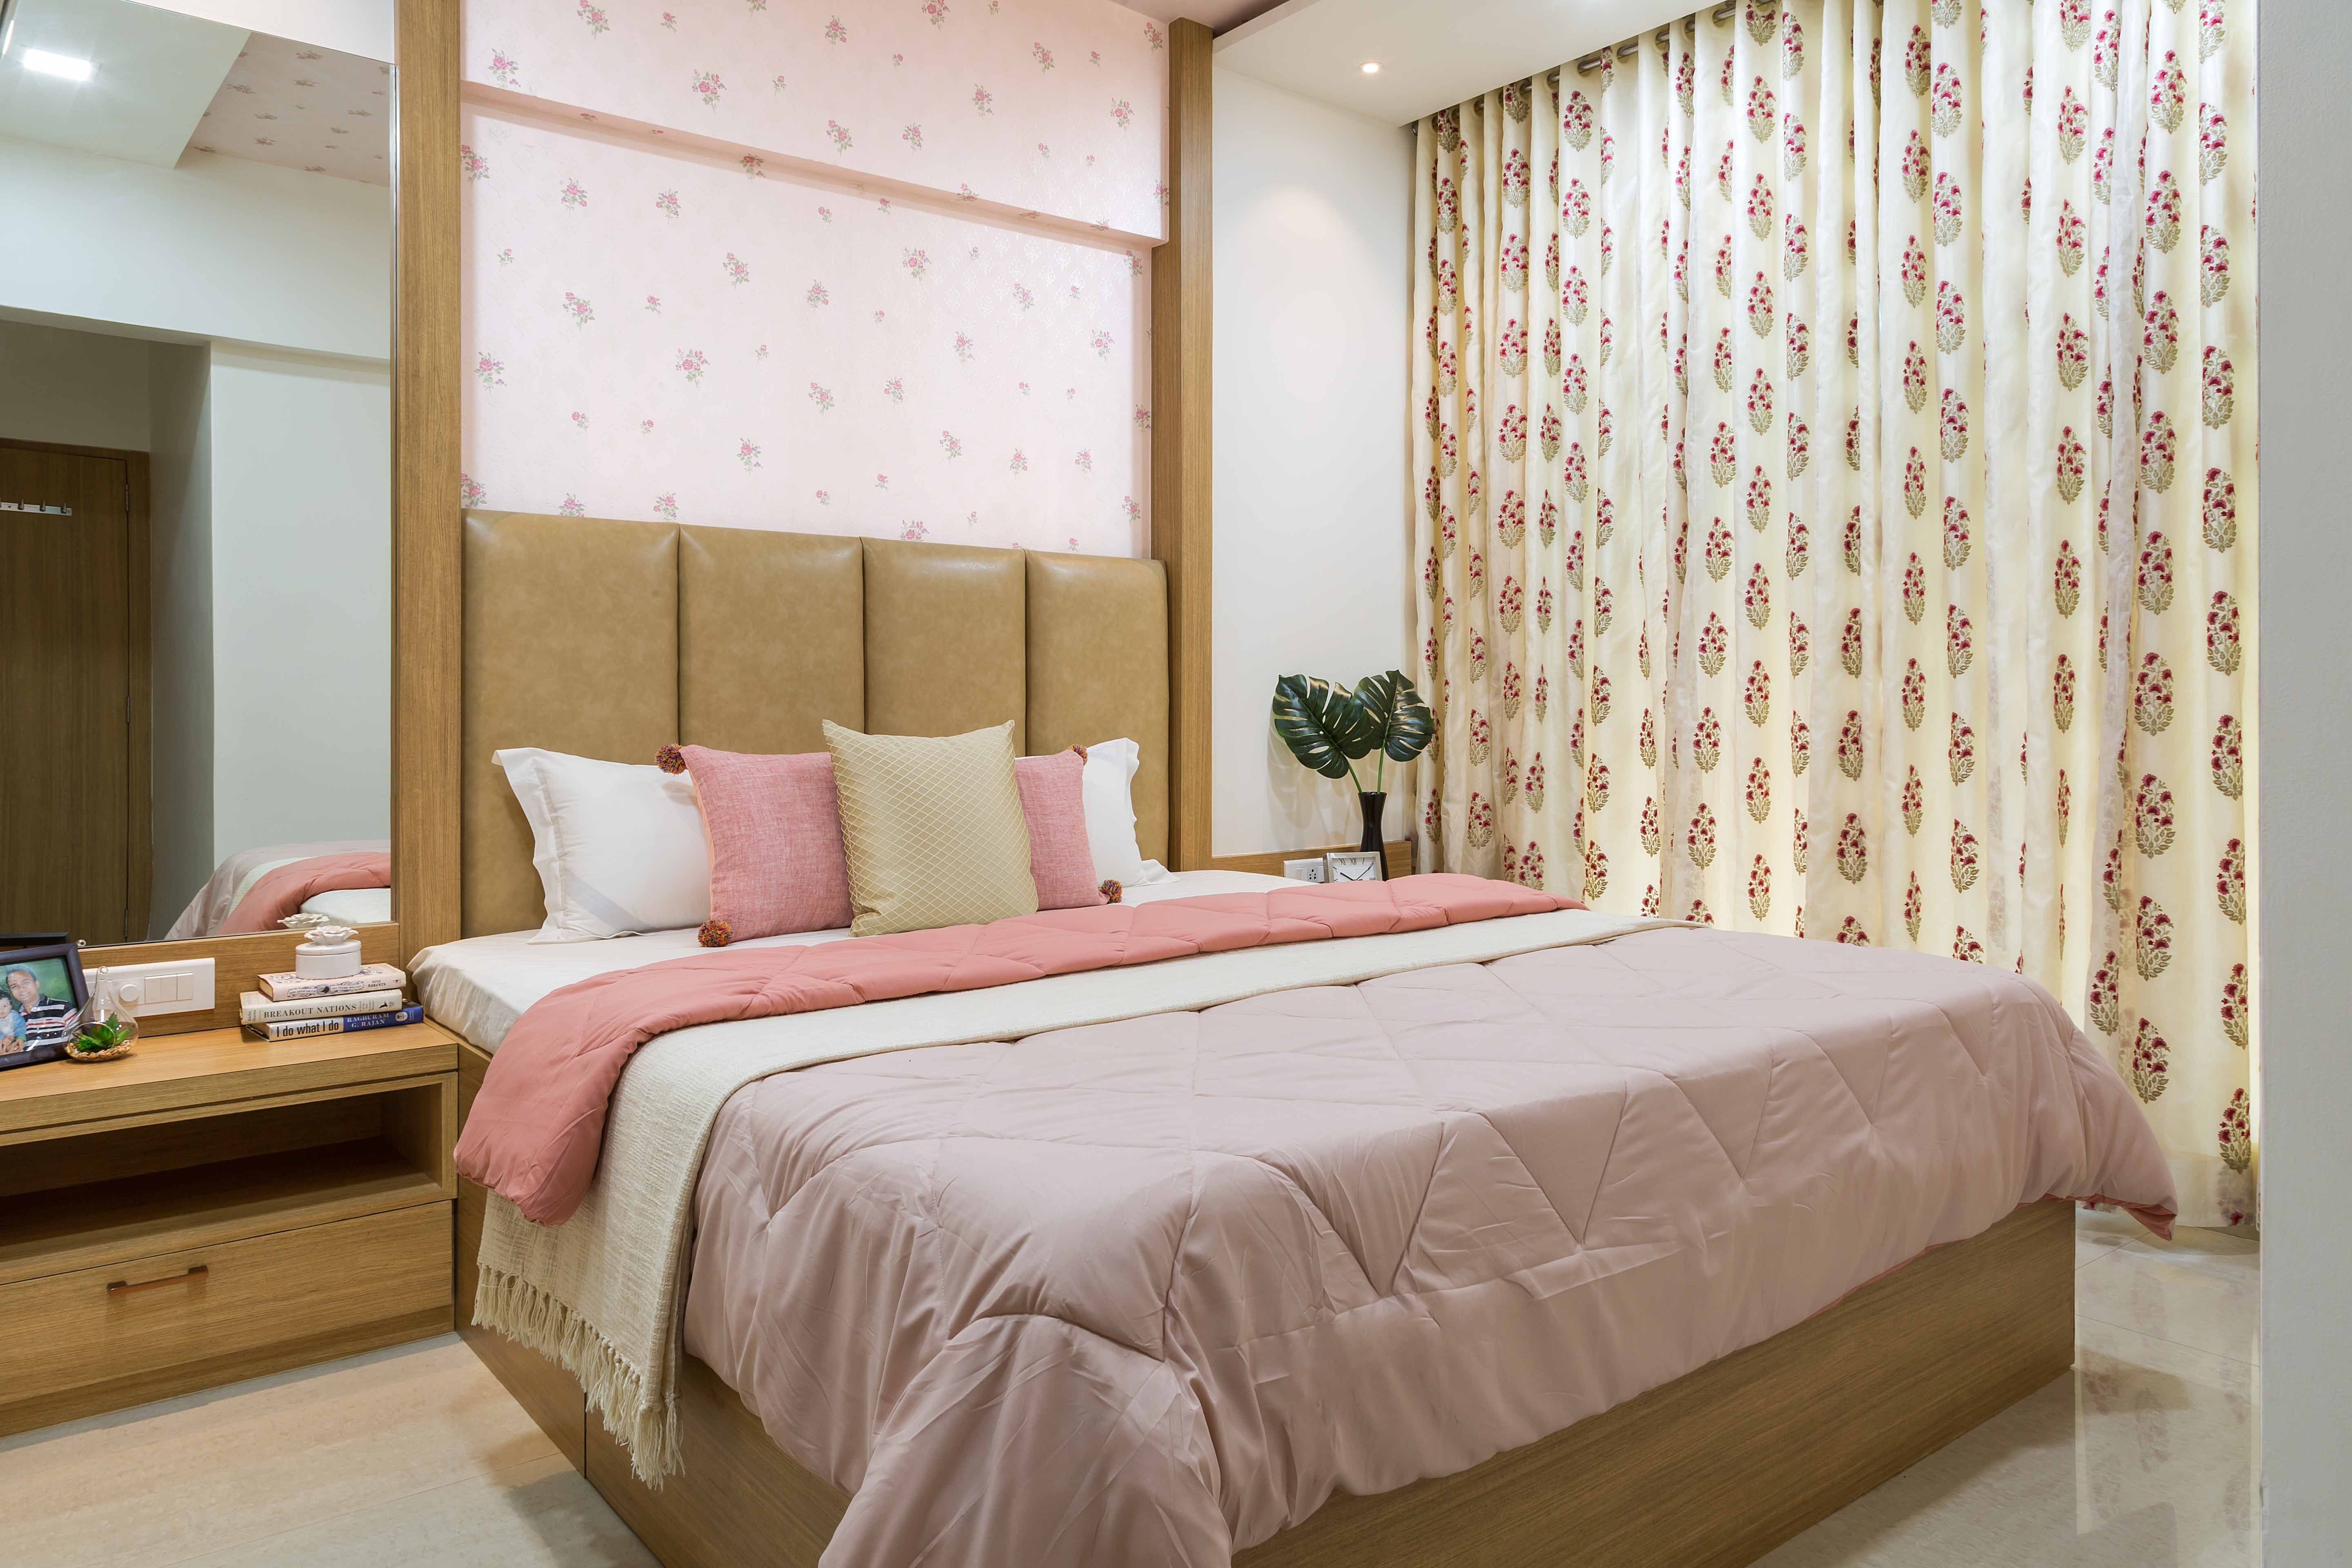 Modern Guest Room Design With Pink Floral Wallpaper